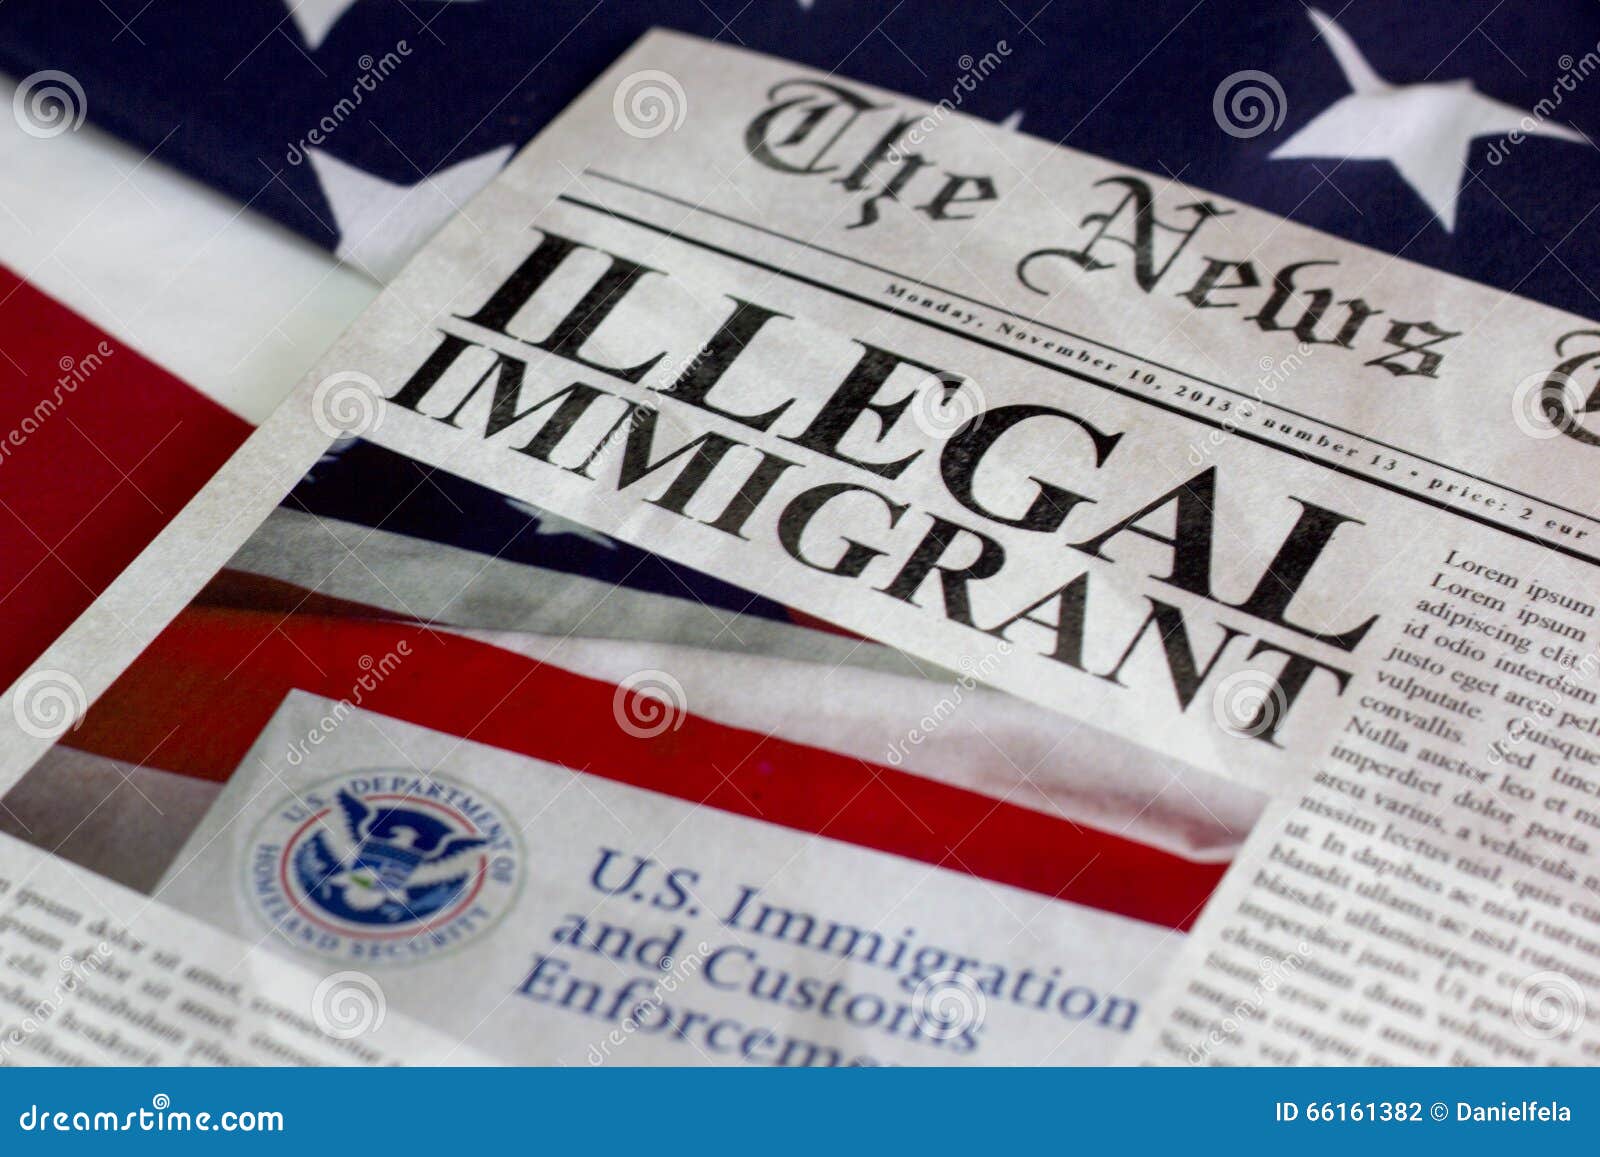 illegal immigrant headline